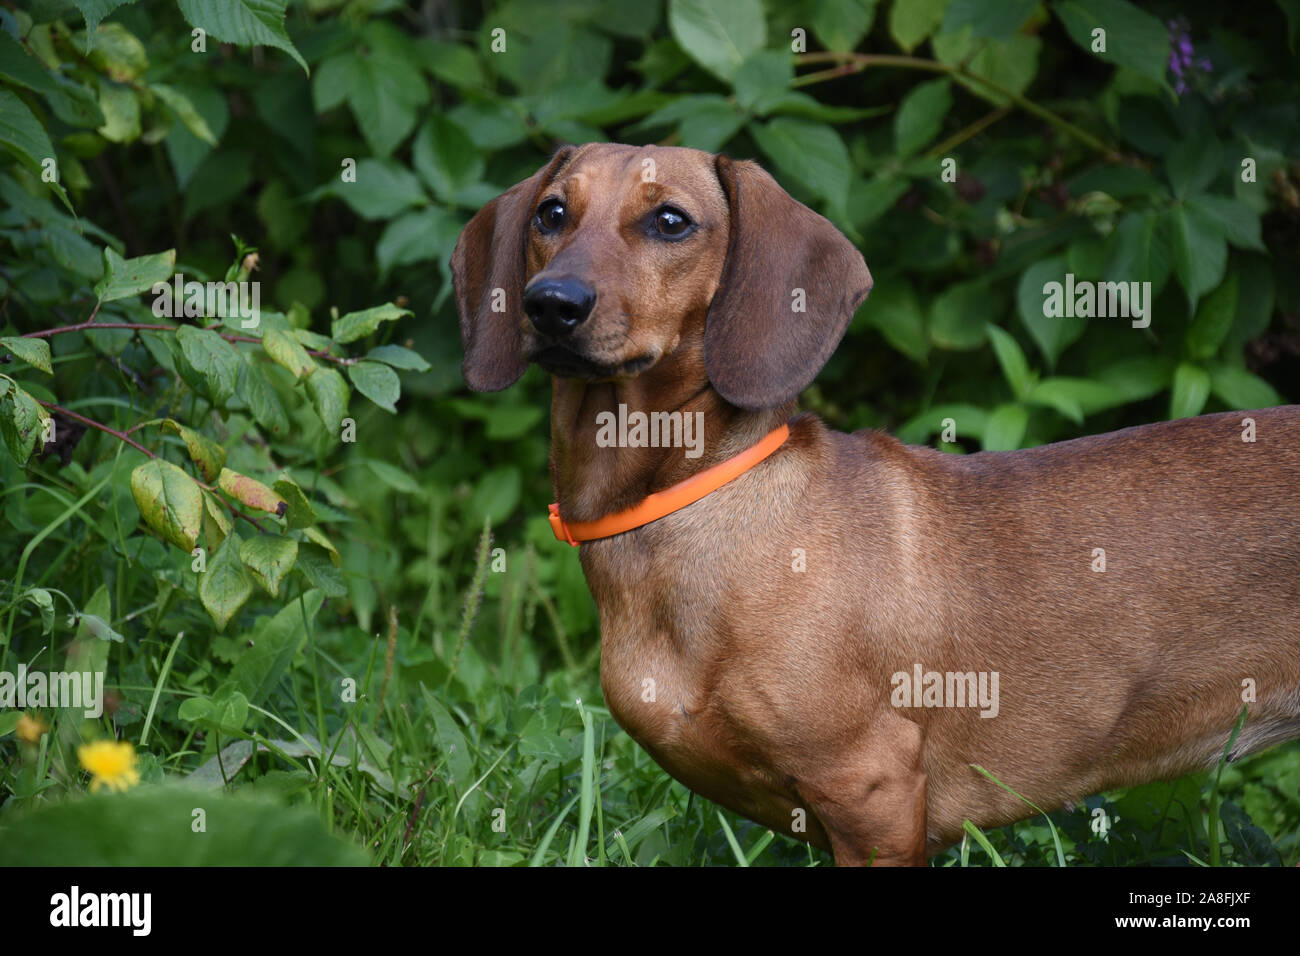 Dachshund in nature with orange collar Stock Photo